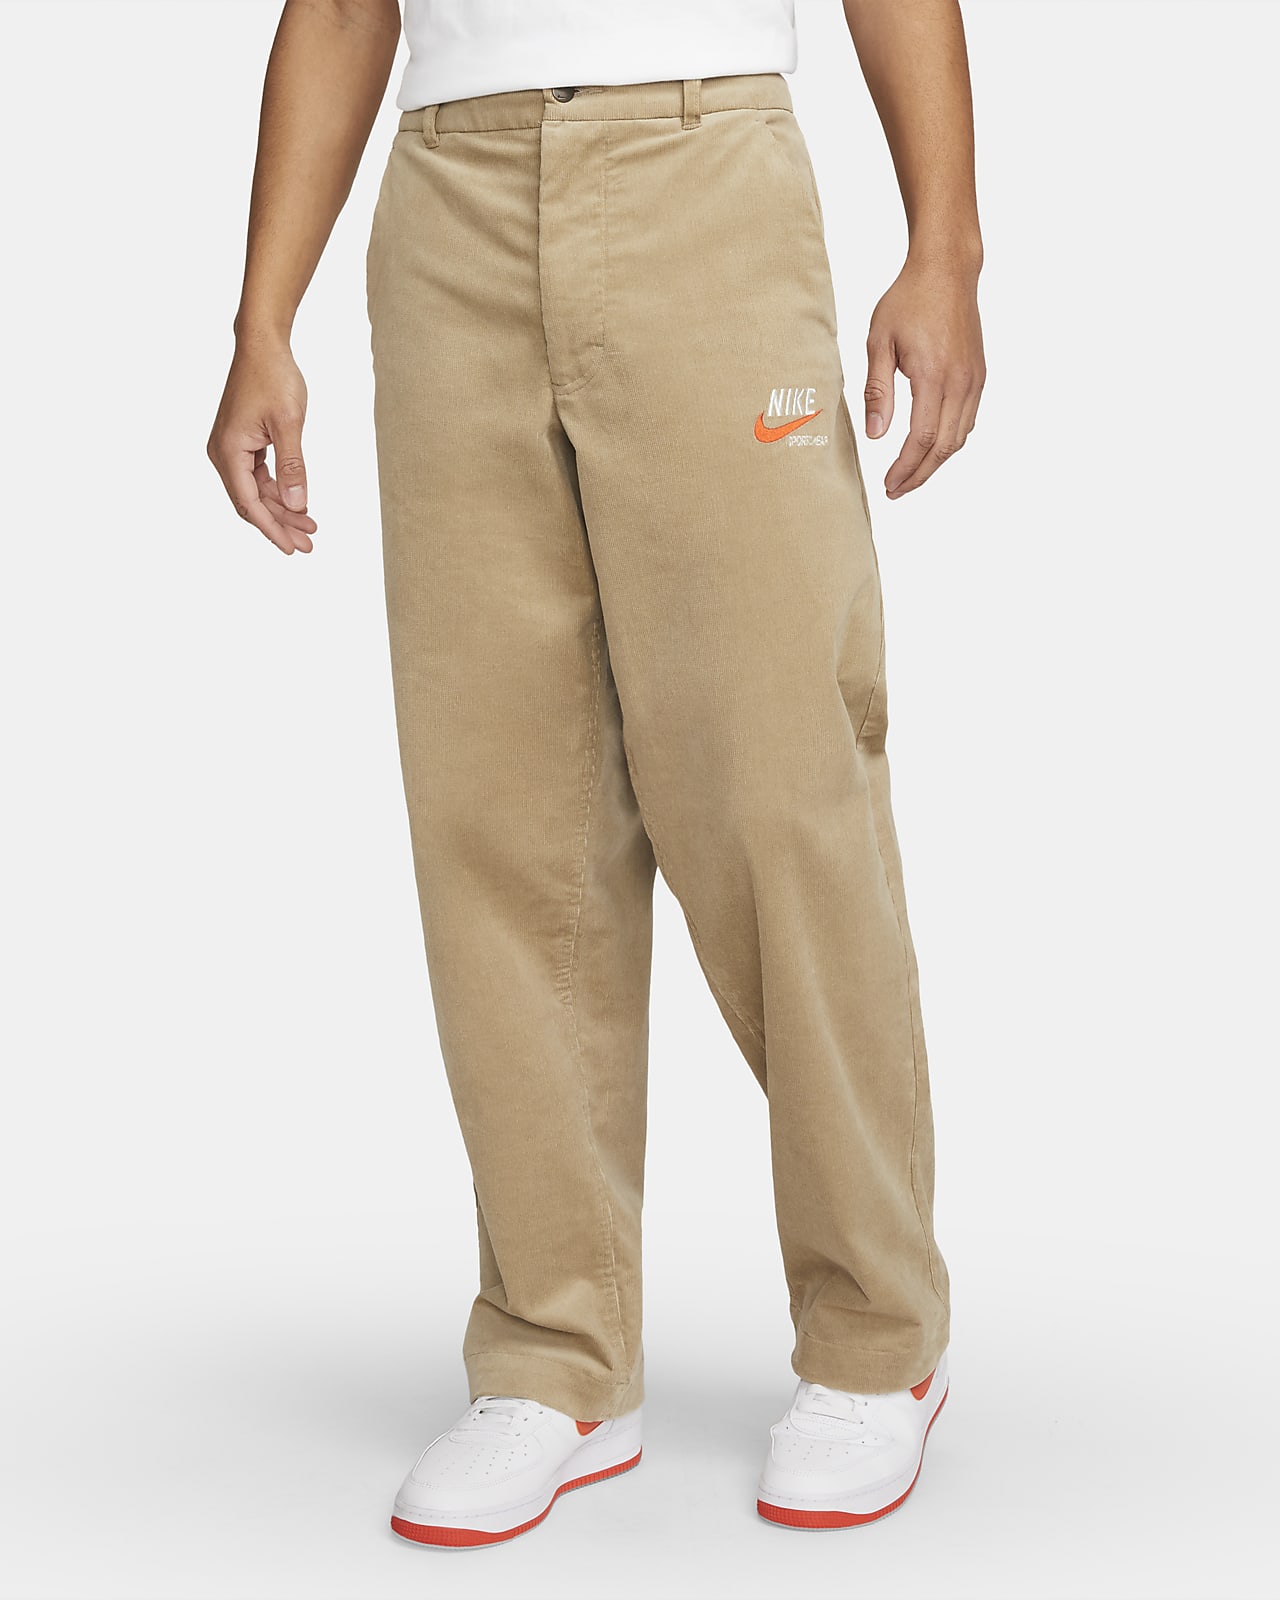 Glimte foran nød Nike Sportswear Trend-bukser til mænd. Nike DK